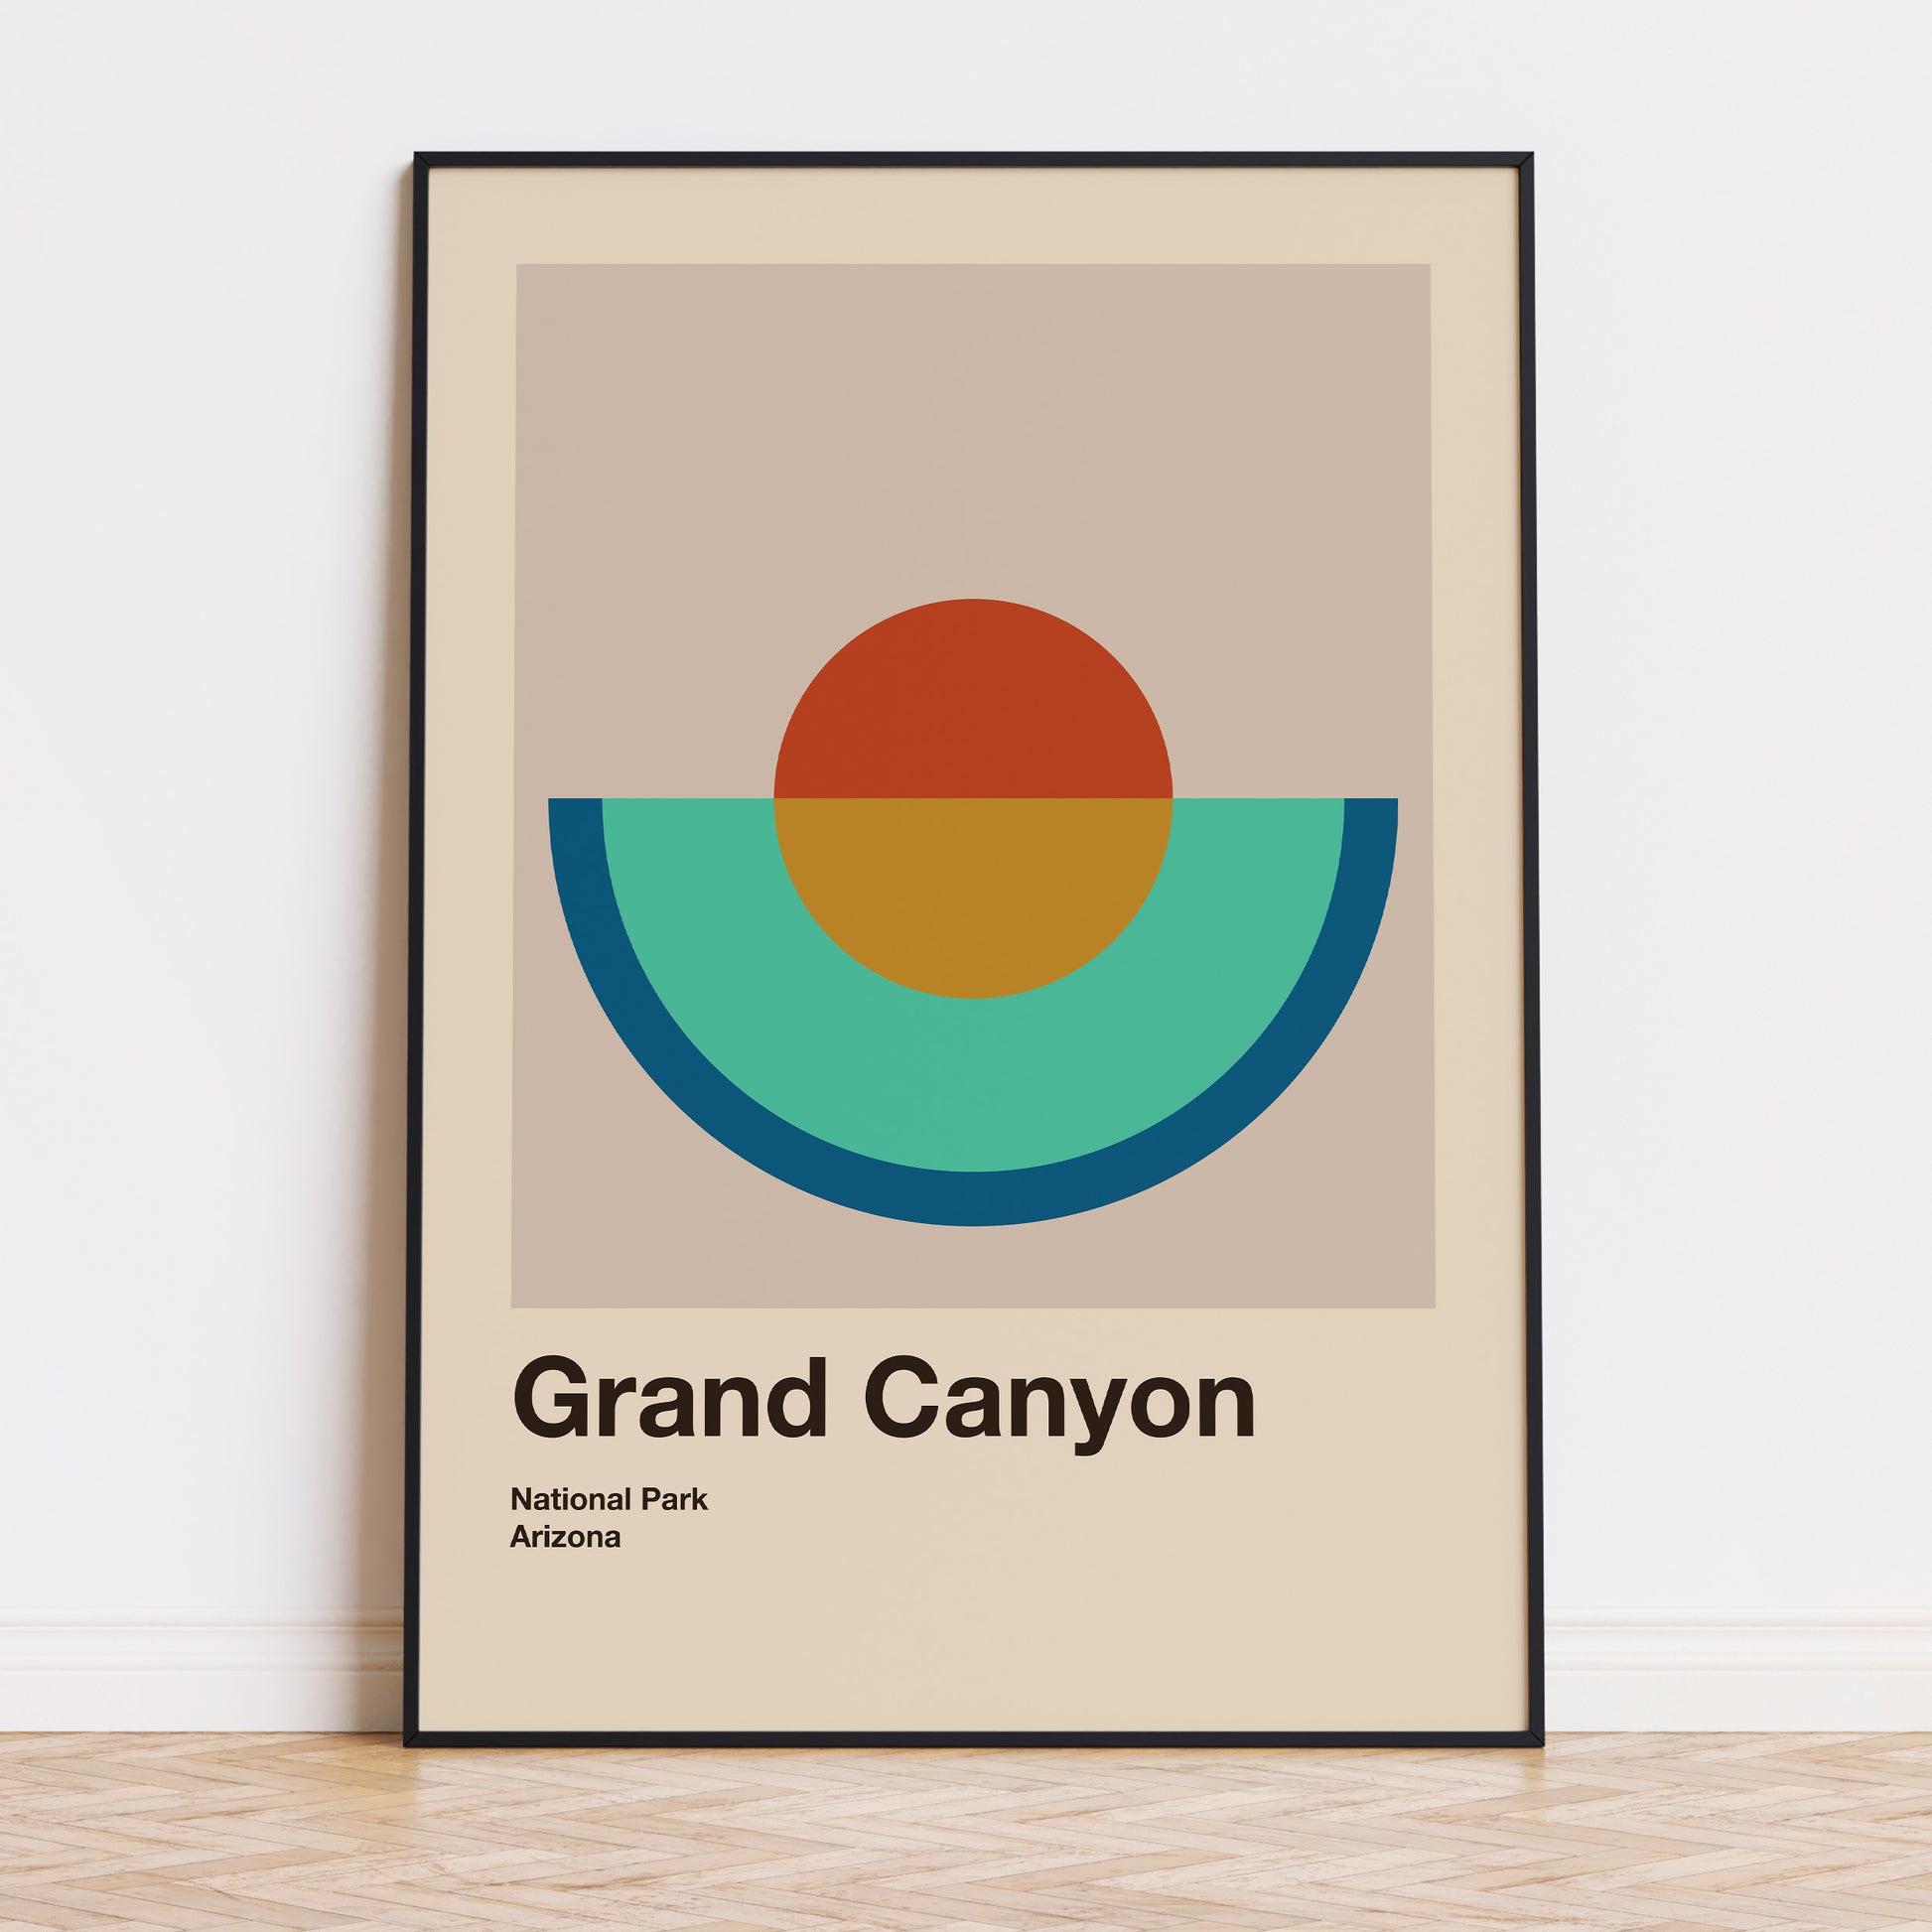 Grand Canyon National Park - Print Material - Grand Canyon Park, national park prints, Travel Poster